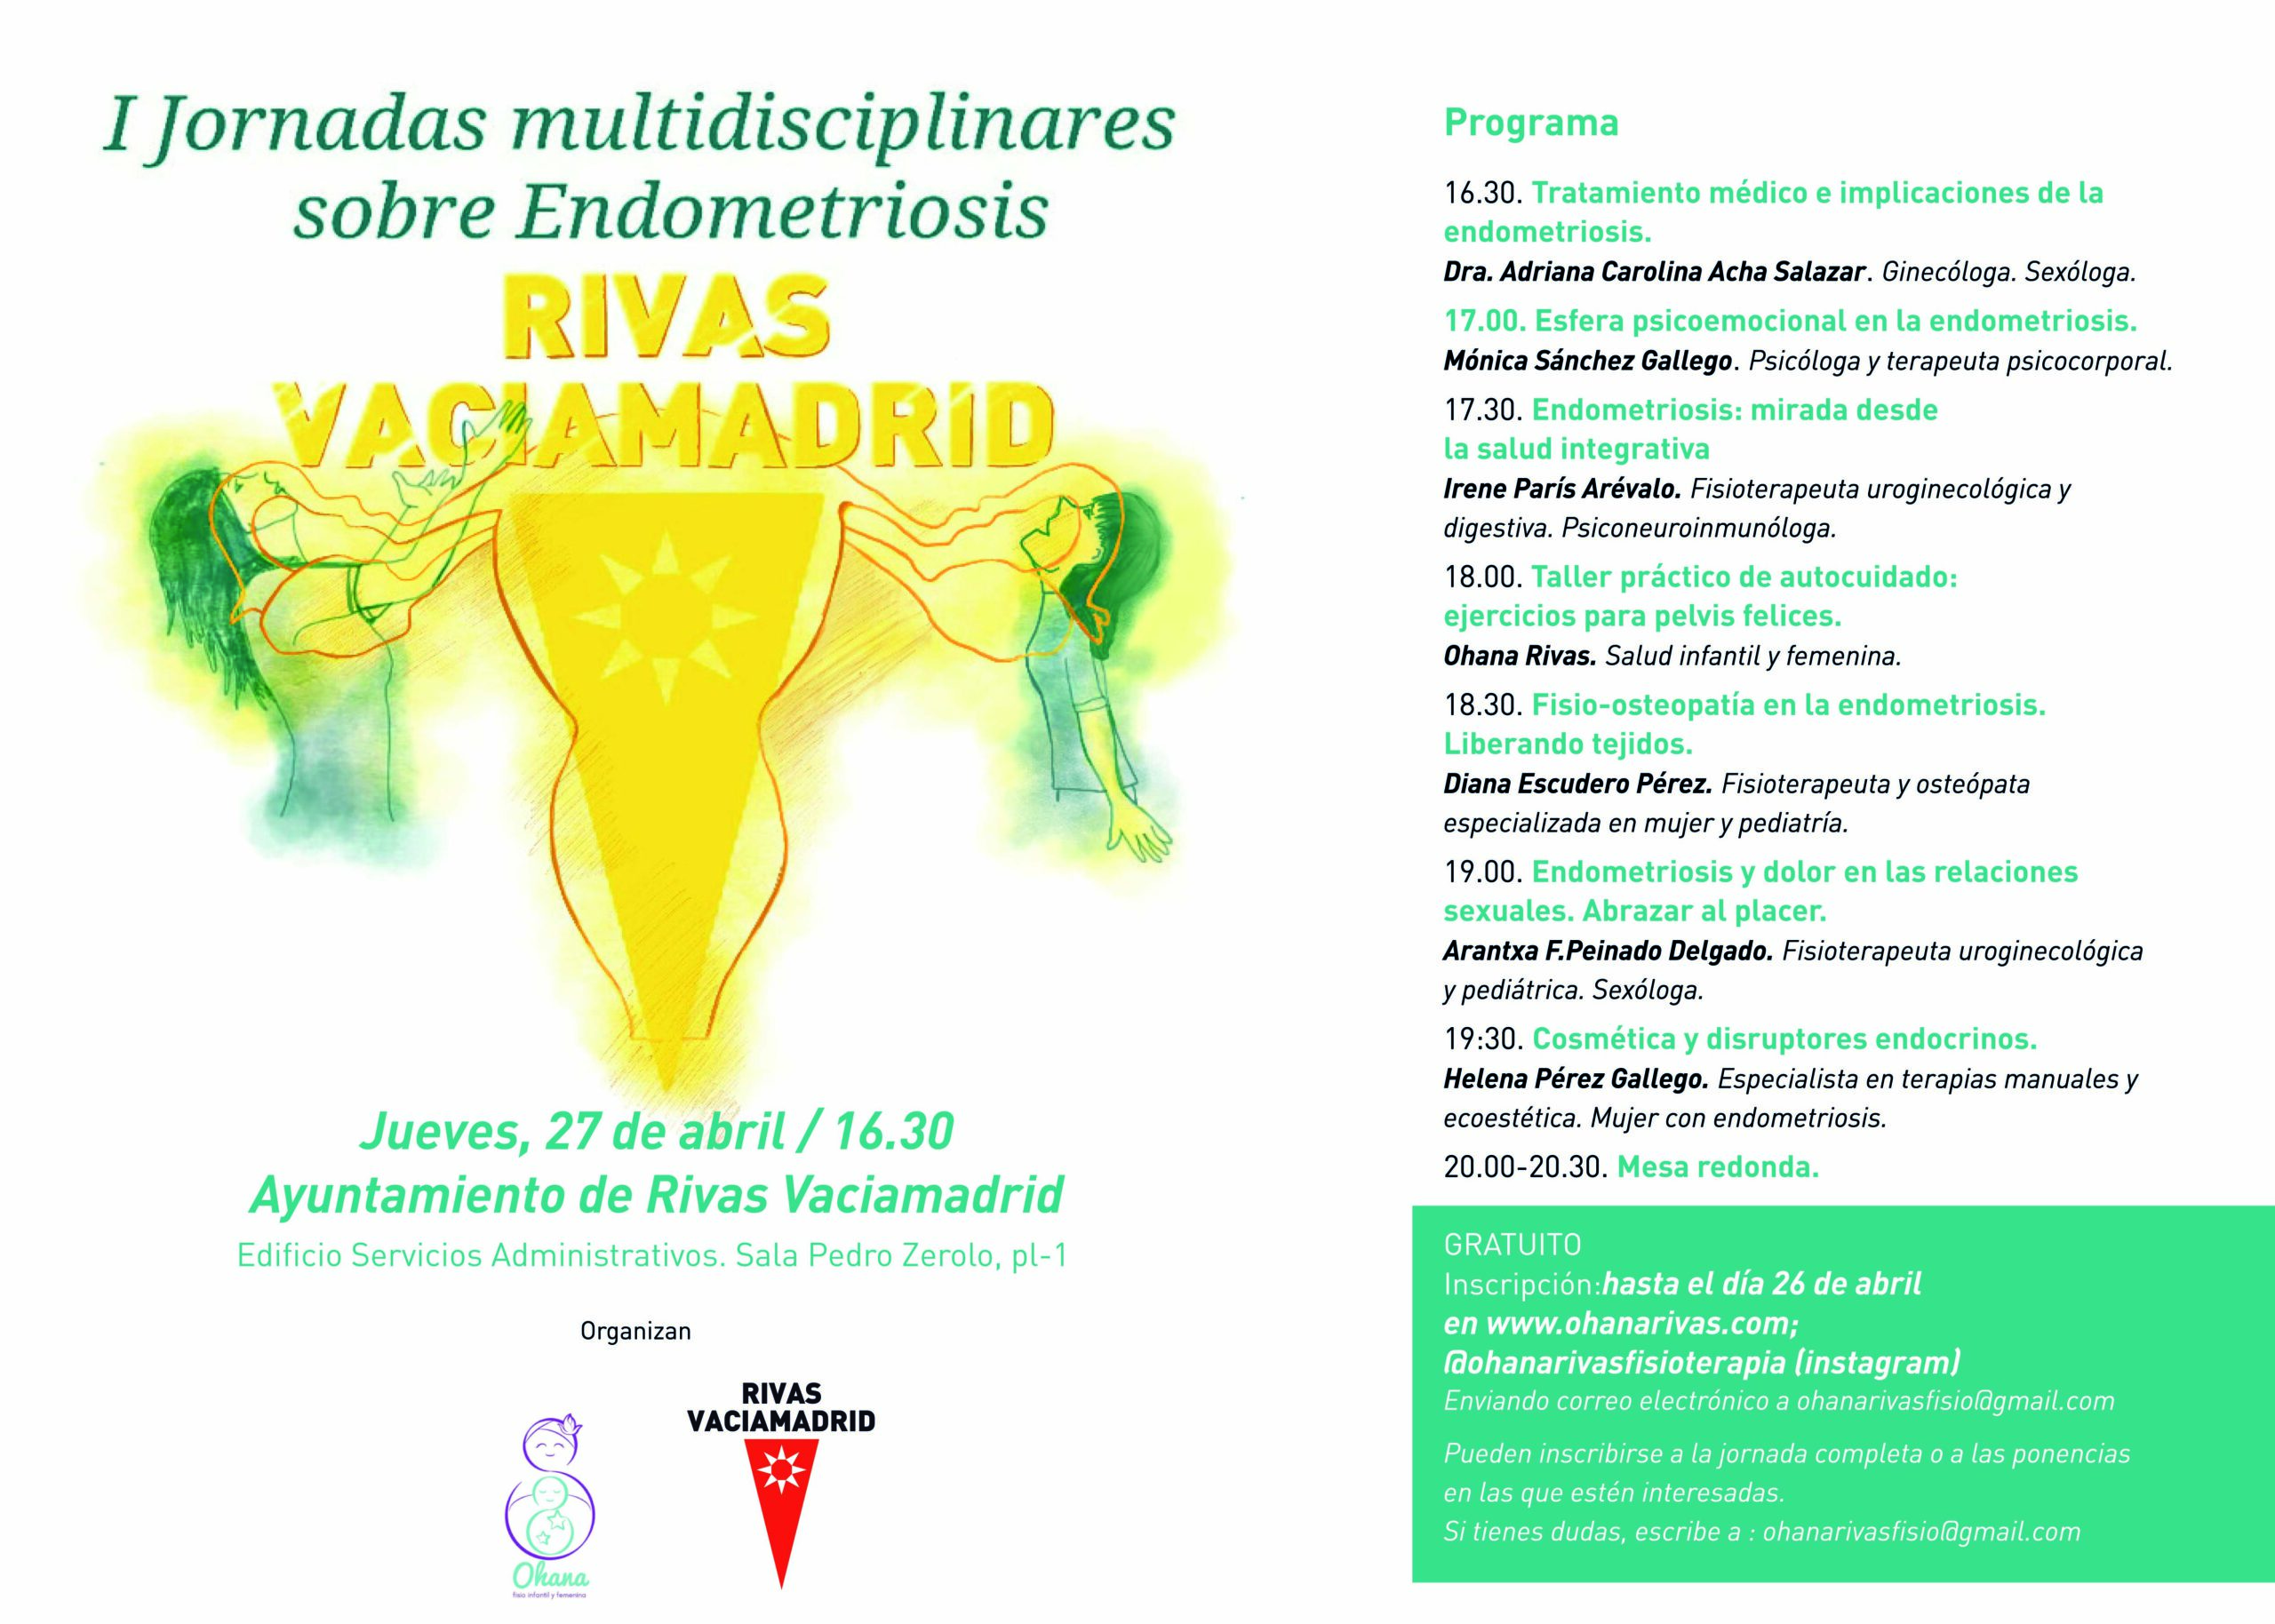 I jornada multidisciplinar sobre endometriosis de Rivas Vaciamadrid